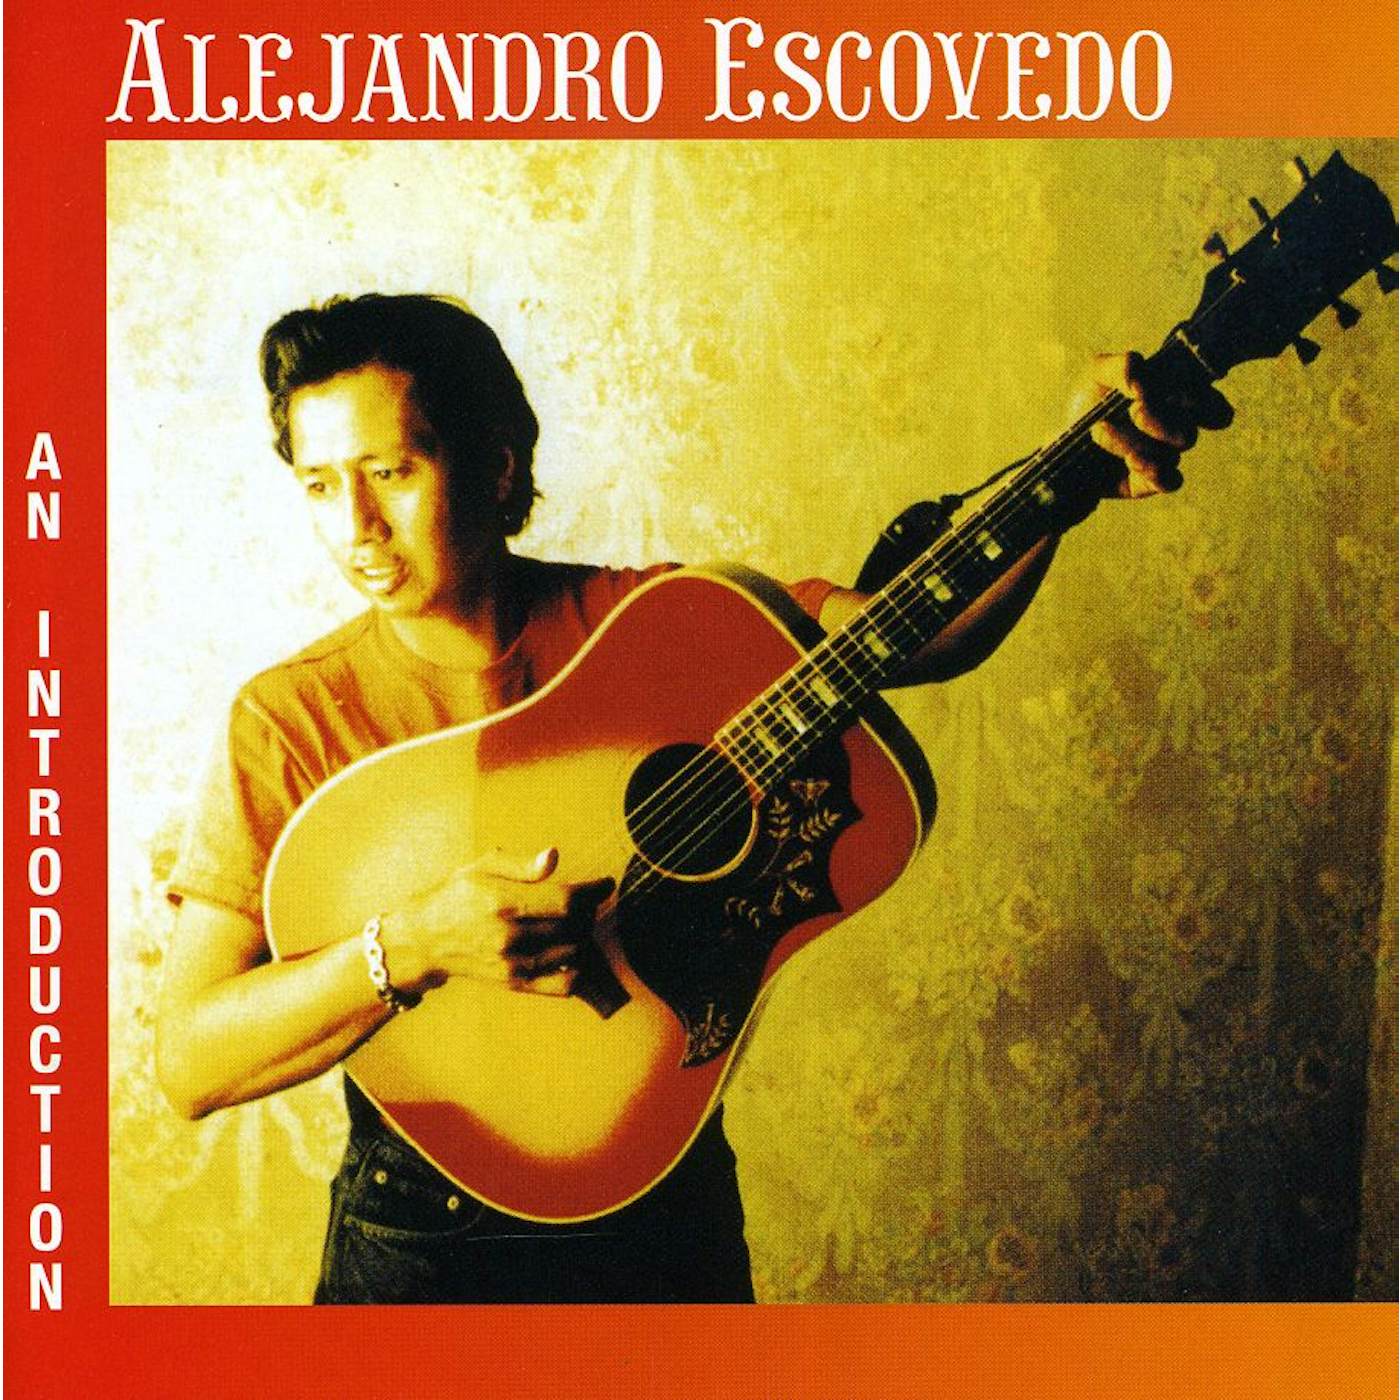 Alejandro Escovedo AN INTRODUCTION CD